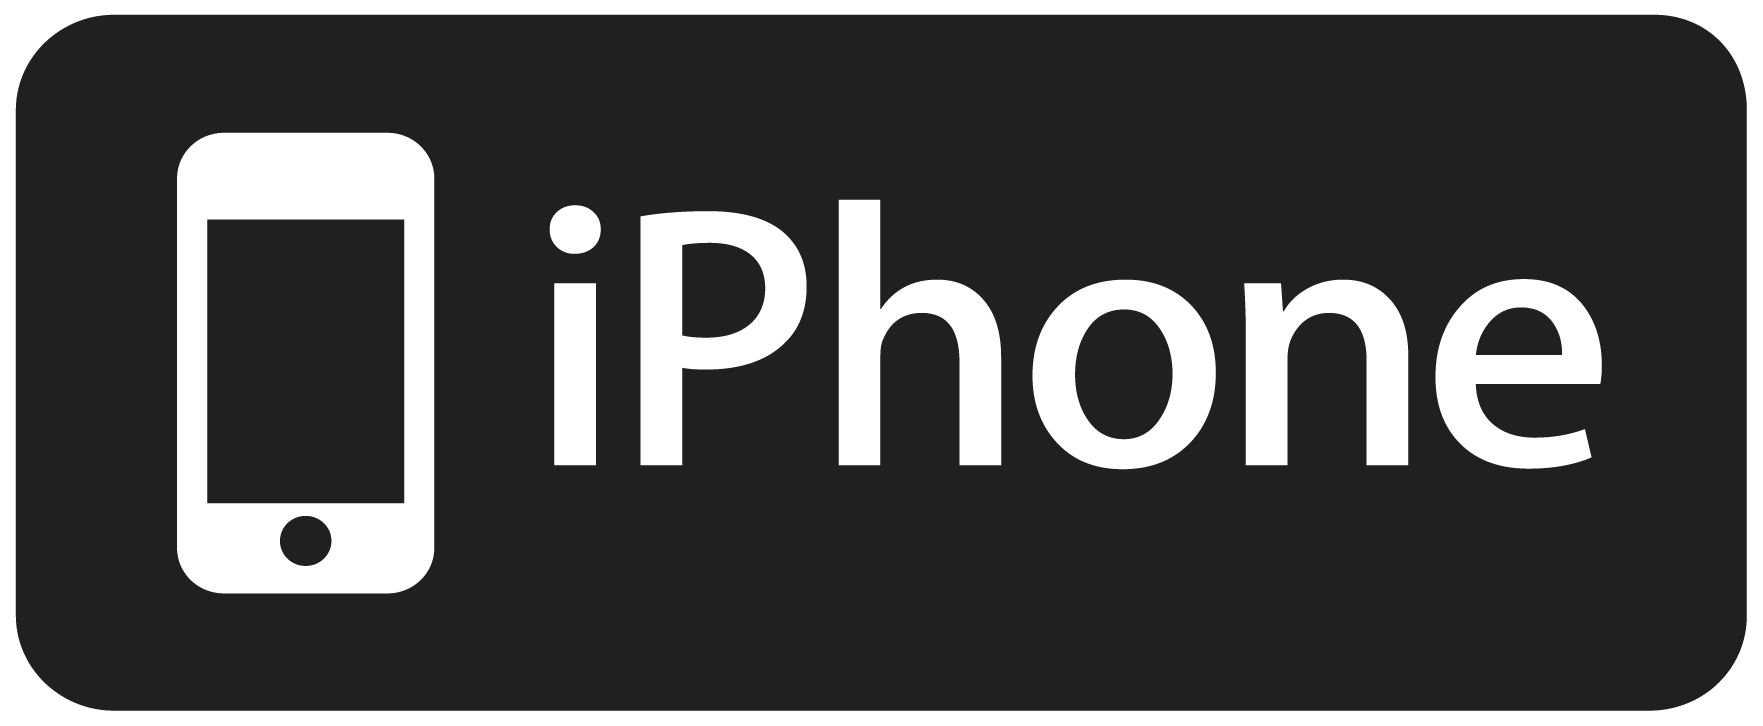 iphone logo transparent background